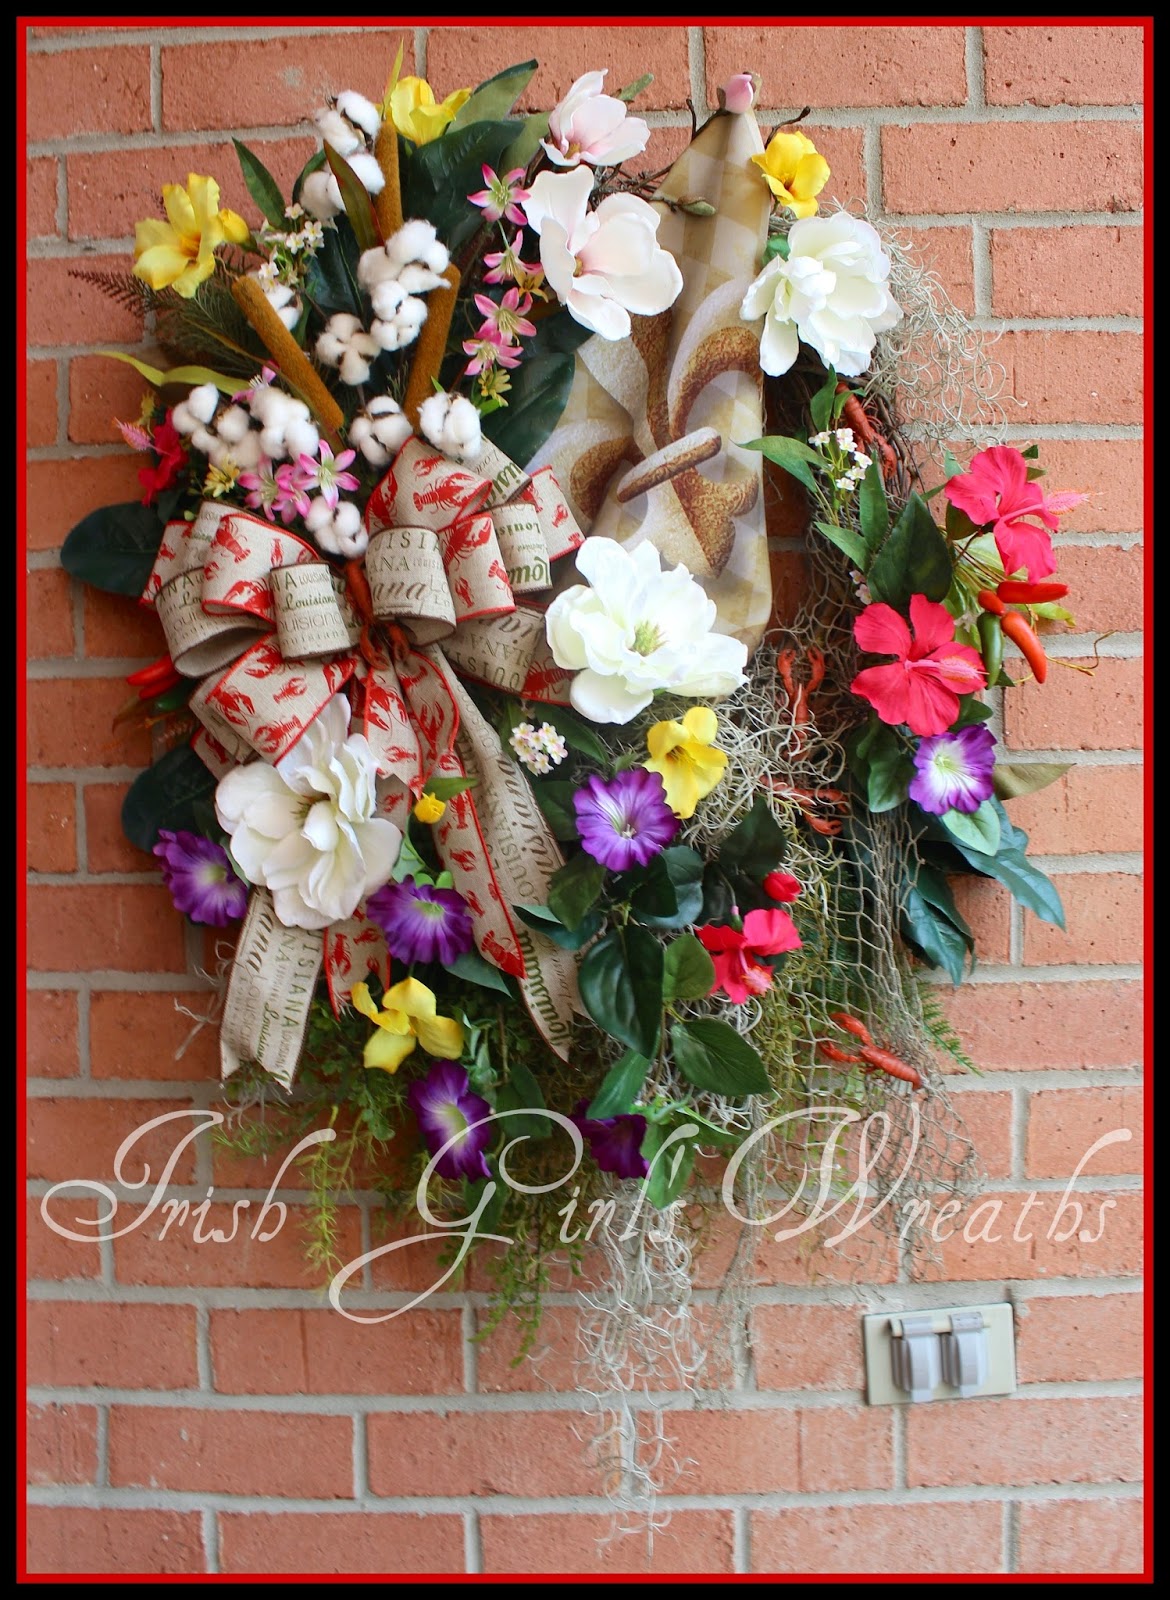 Irish Girl's Wreaths  Top Quality Handmade Artisan Floral Wreaths for all  Seasons » XL Rustic Cajun Louisiana Summer Wreath, Wall hanging, Magnolia,  Spanish Moss, Bayou, Fleur de Lis Flag, Crawfish, Fishing